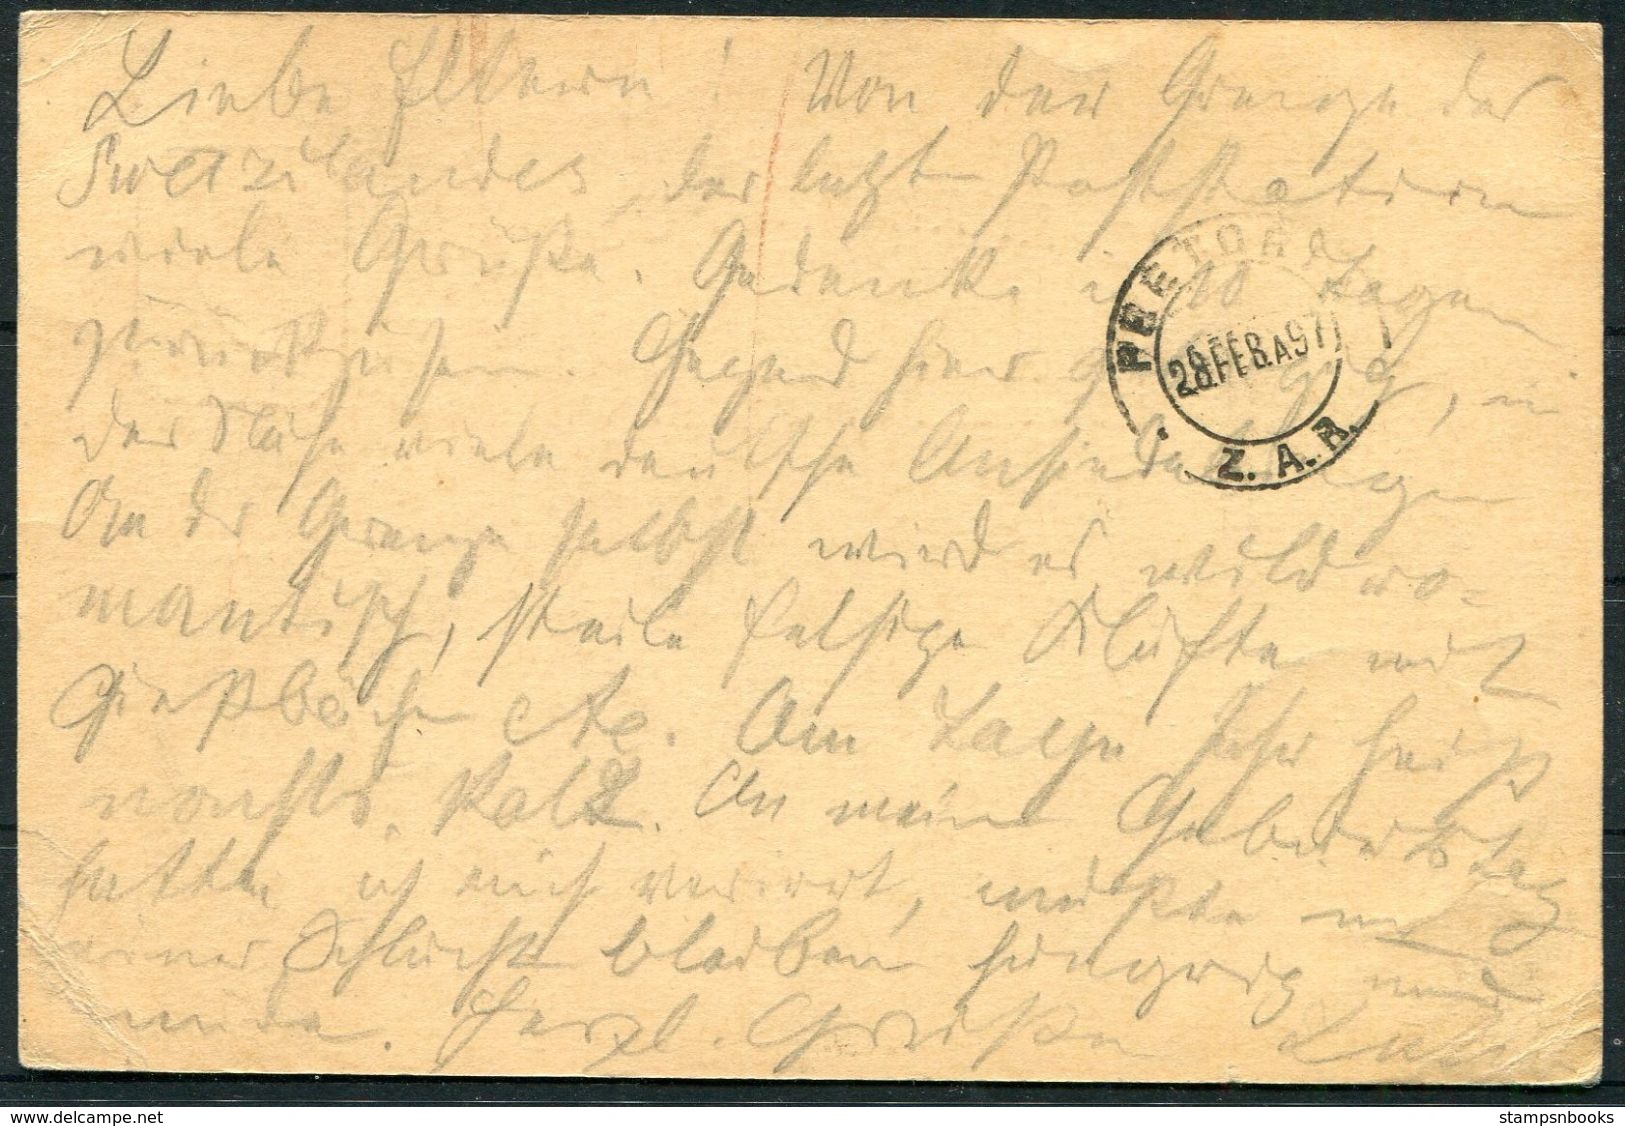 1897 South Africa Z.A.R. Stationery Postcard - Frottstadt Germany - Nouvelle République (1886-1887)